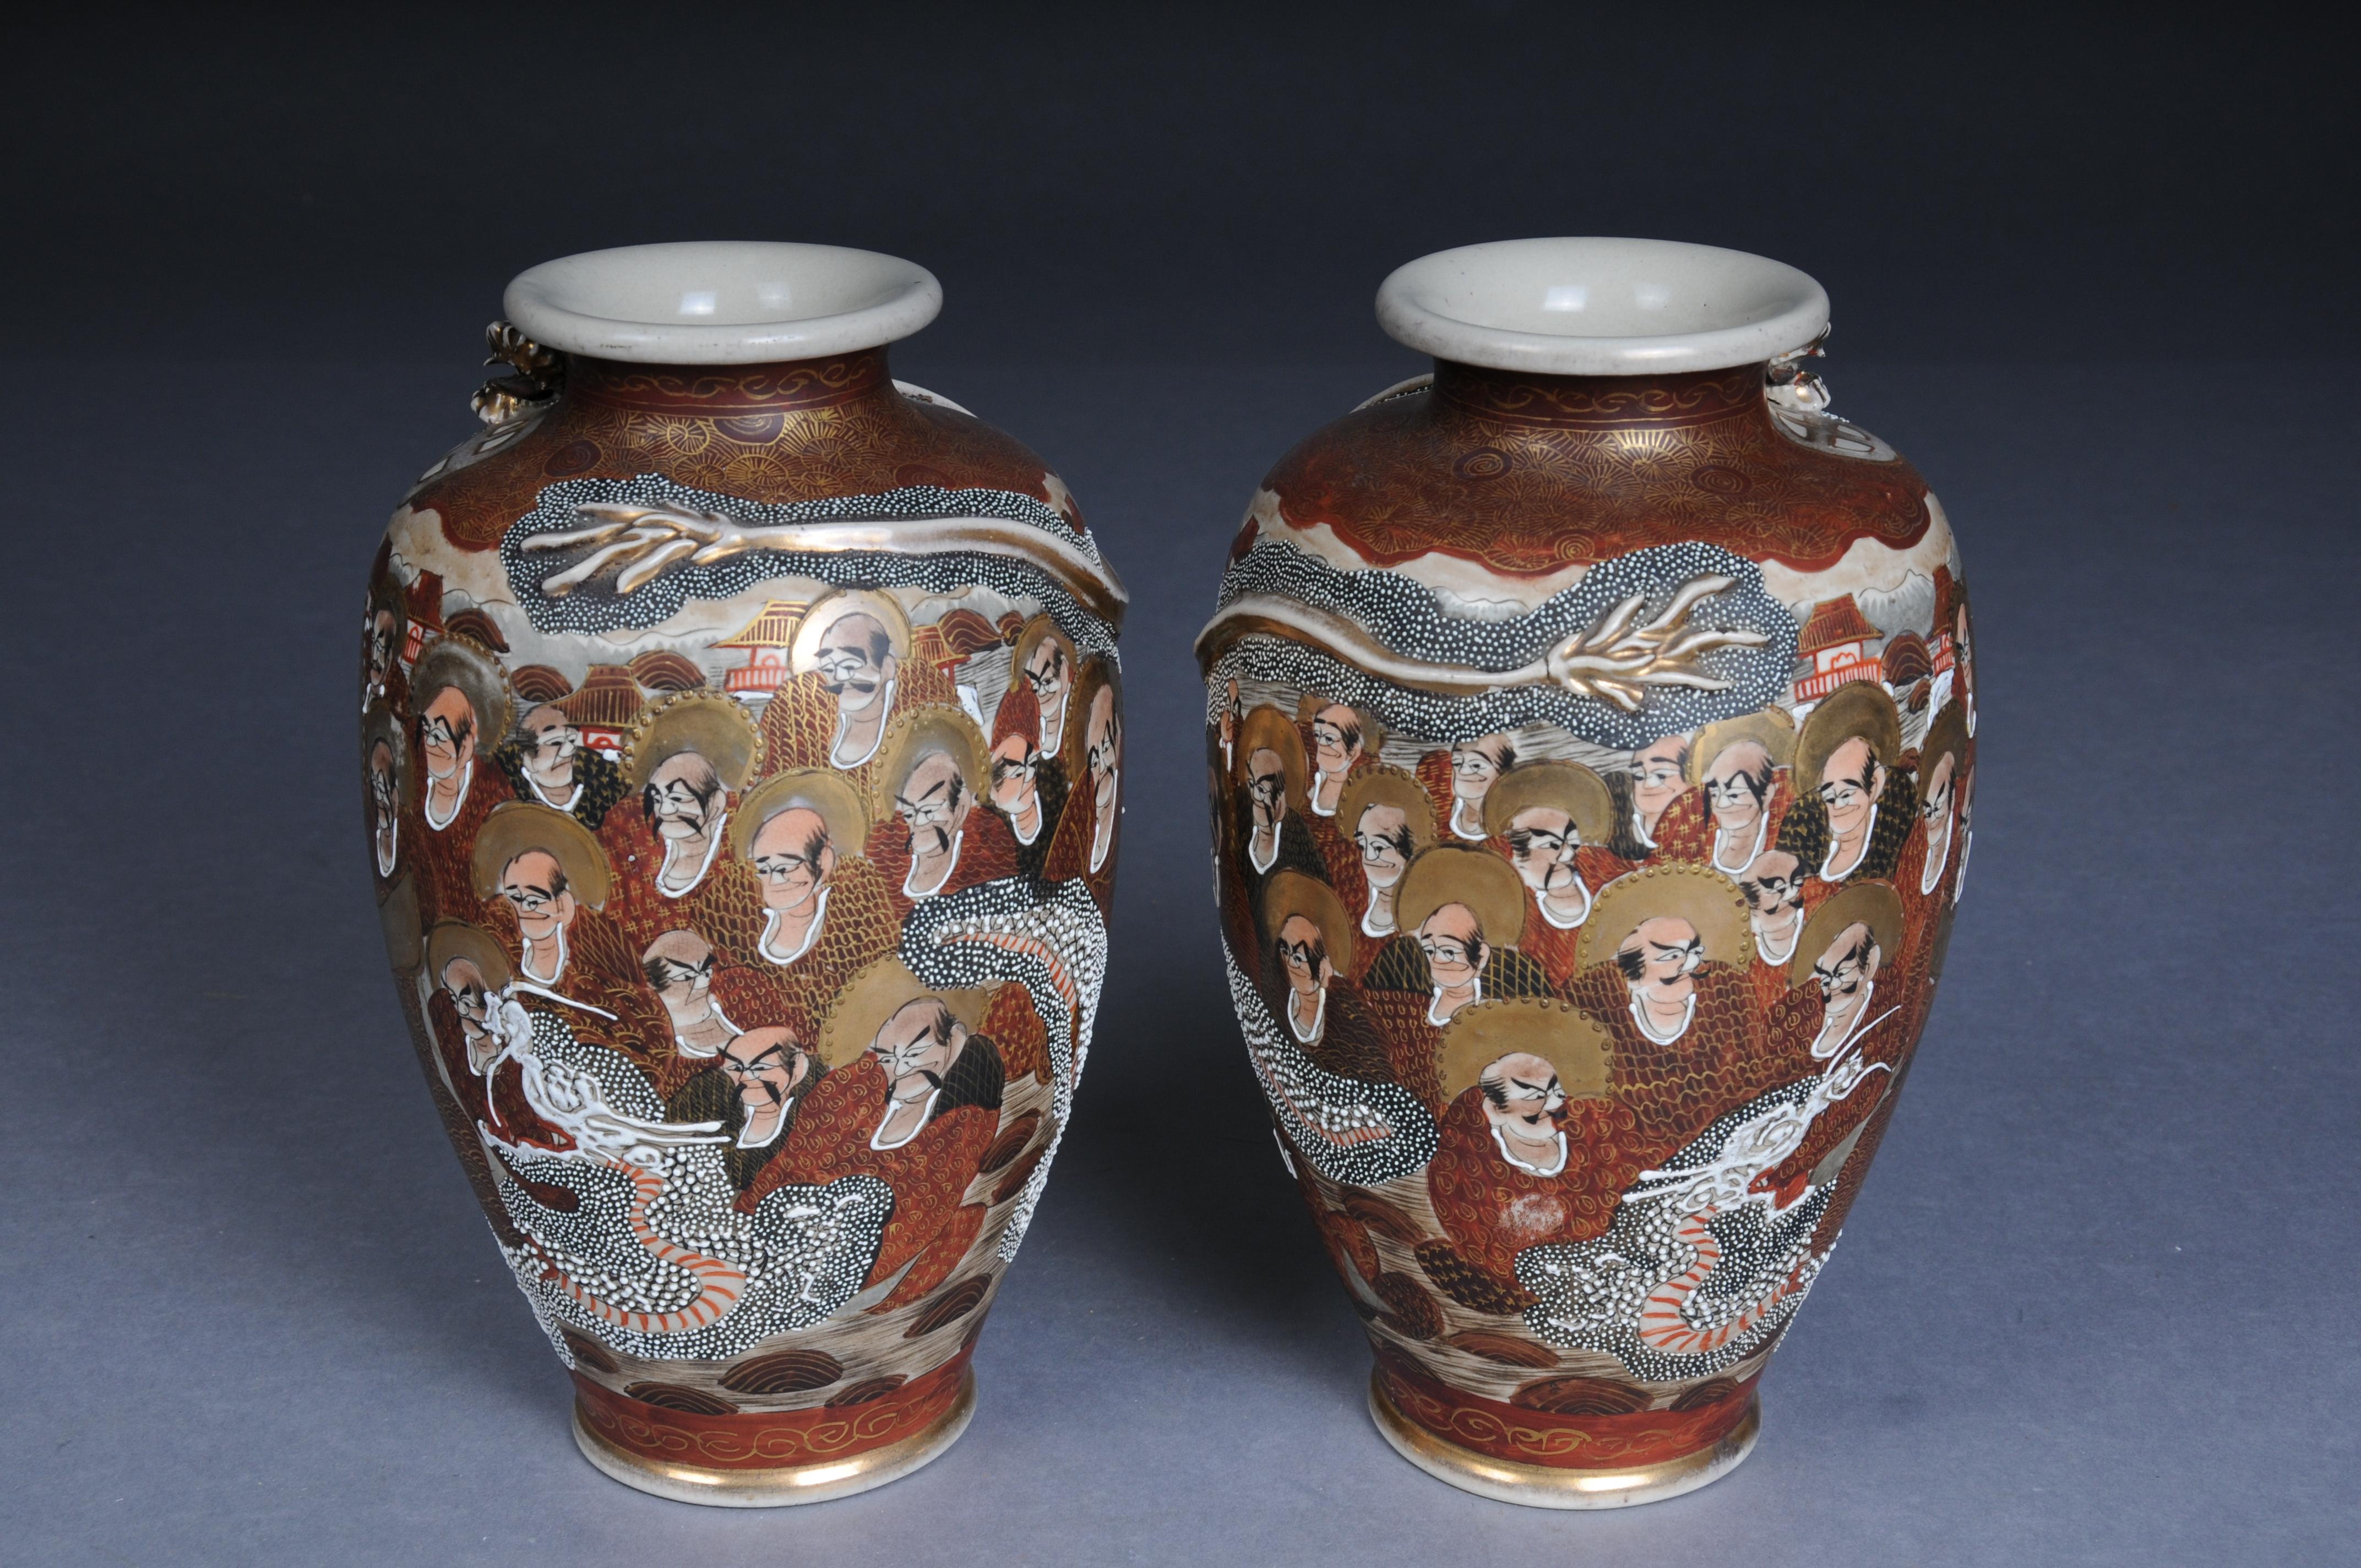 2 Vase japonais Satsuma, Choshuzan, poterie japonaise Satsuma, période Meiji

2 anciens vases japonais Satsuma, 